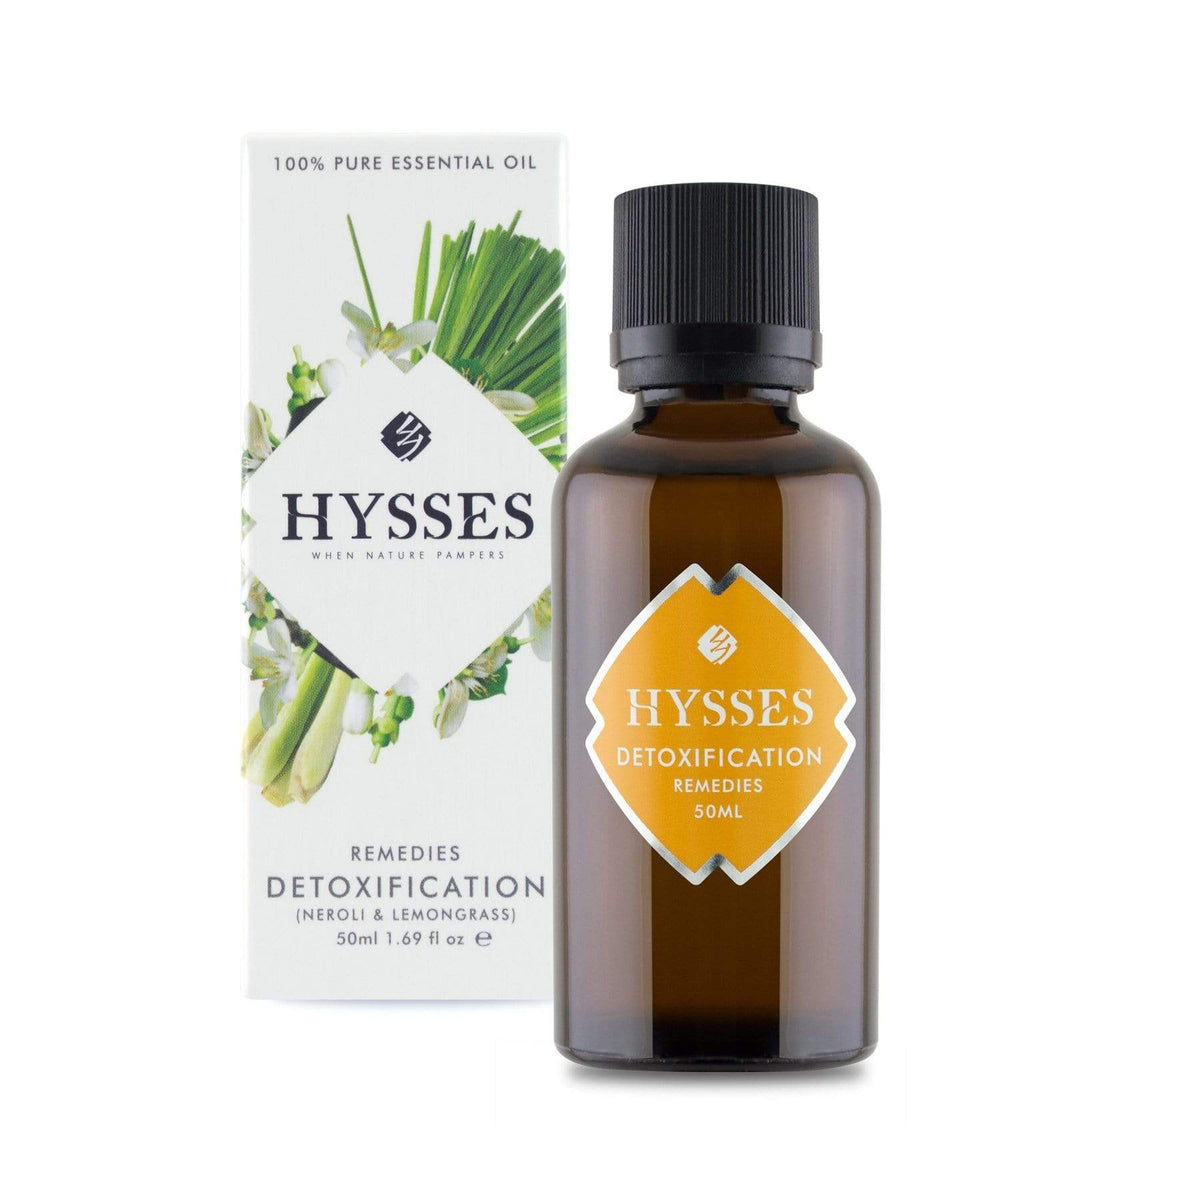 Hysses Essential Oil Remedies, Detoxification